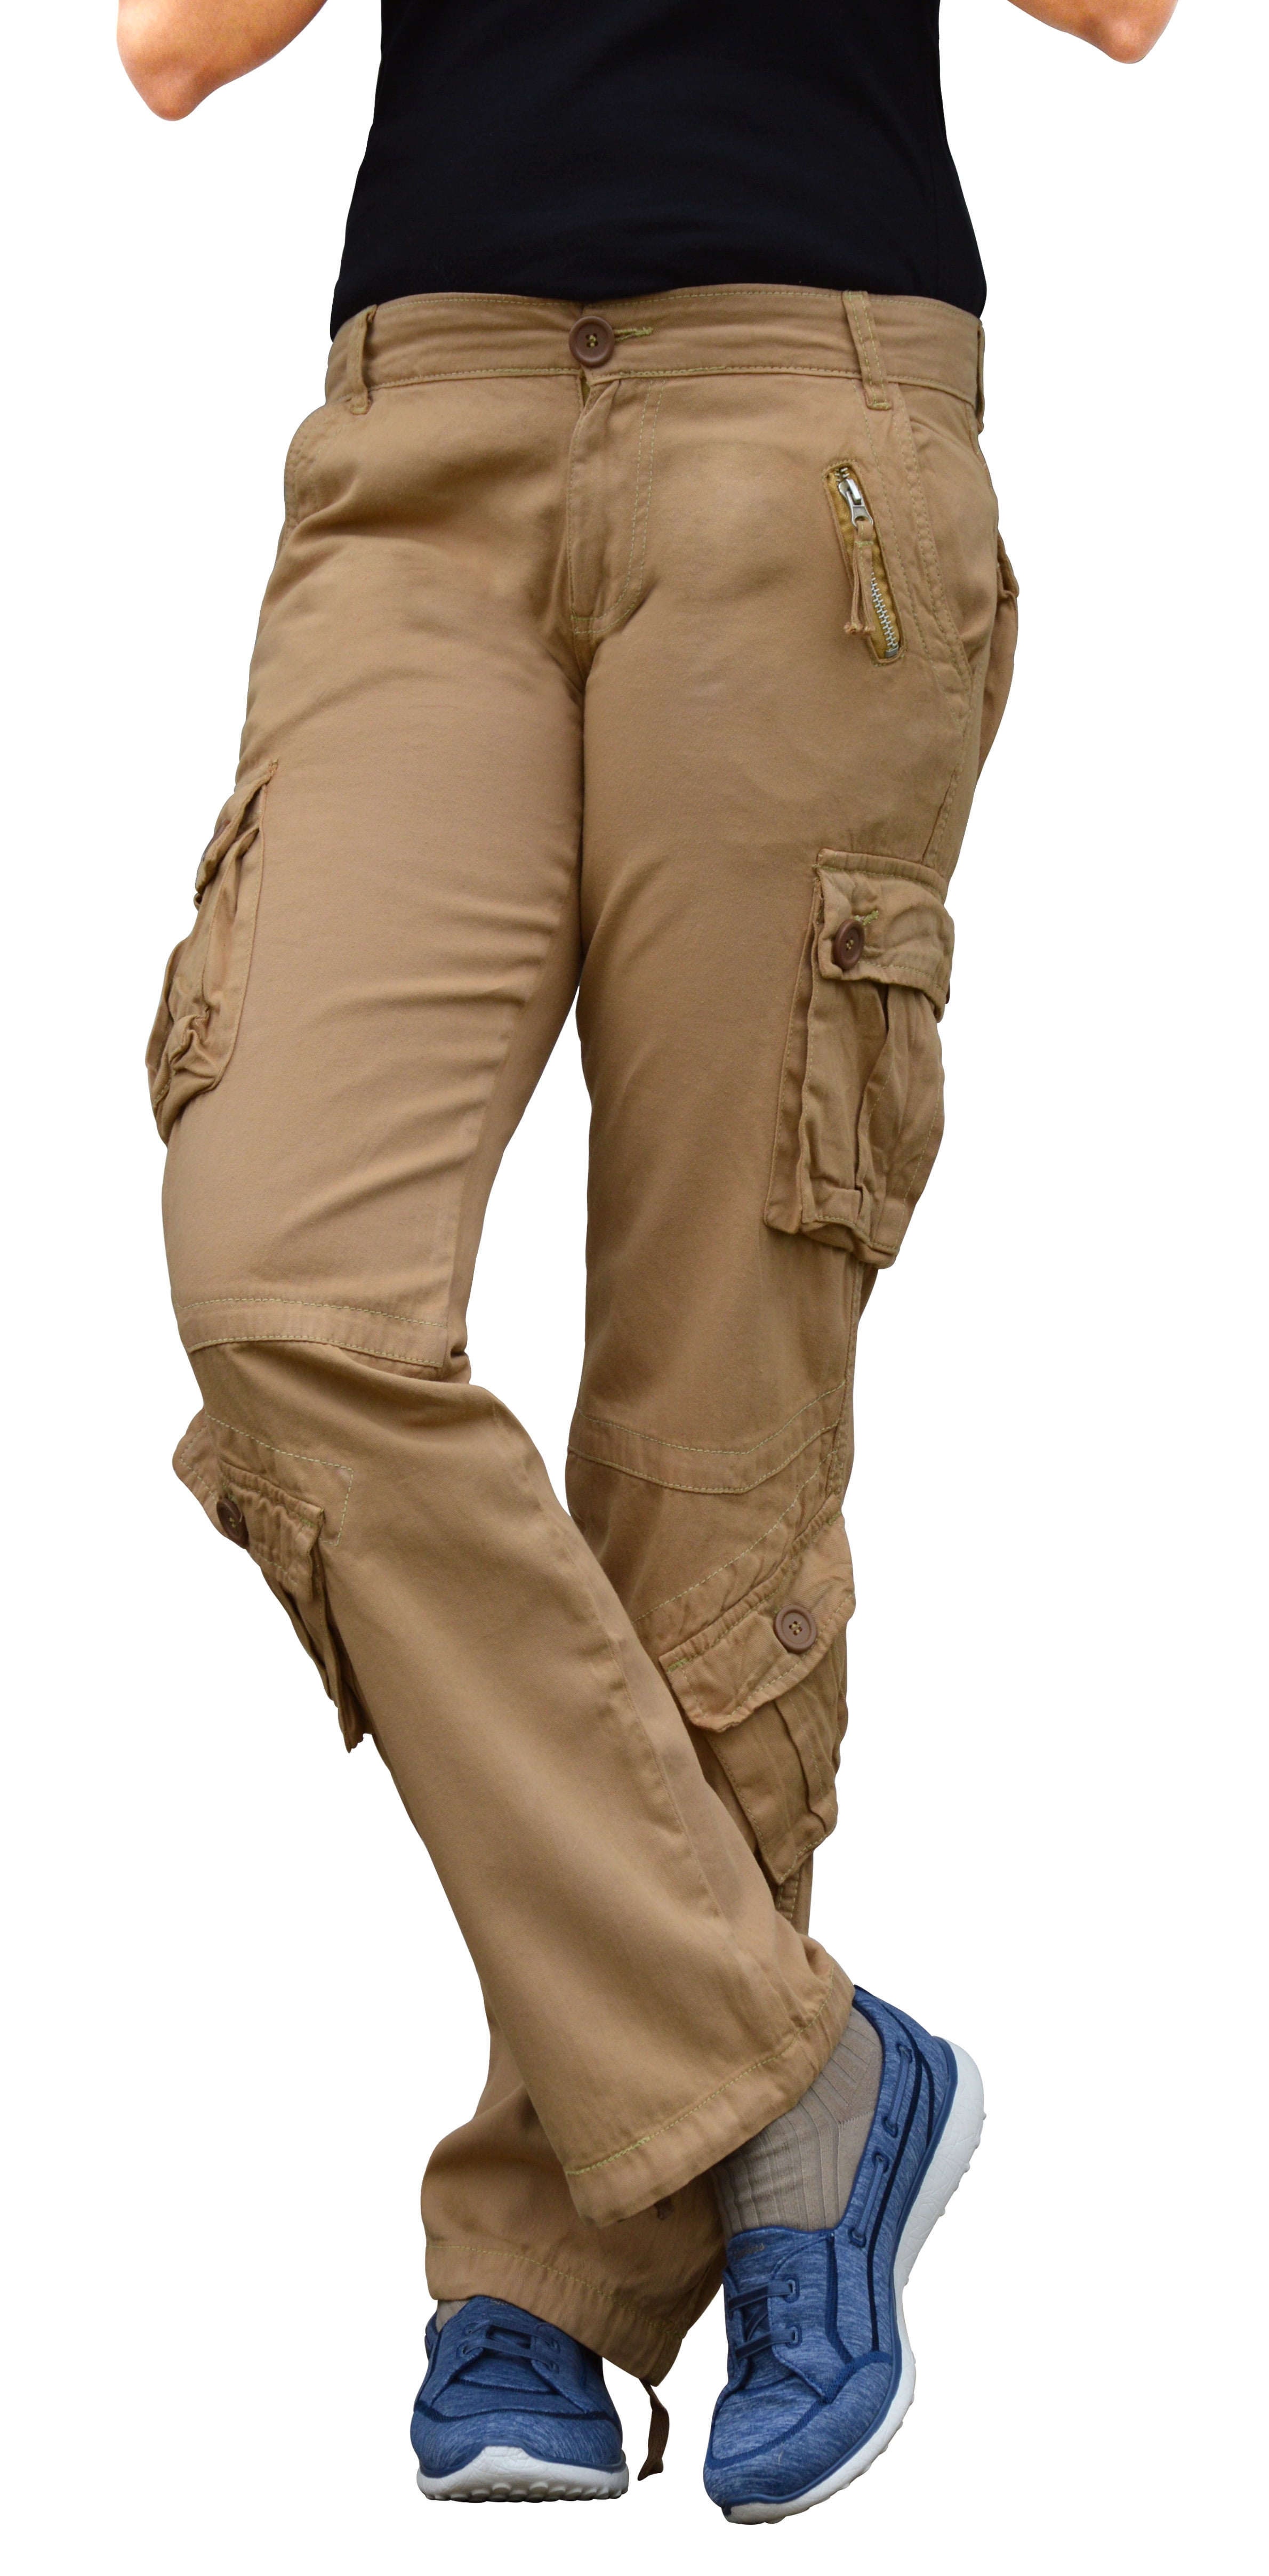 Skylinewears Women’s Casual Cargo Pants Utility Military Pants Trousers ...